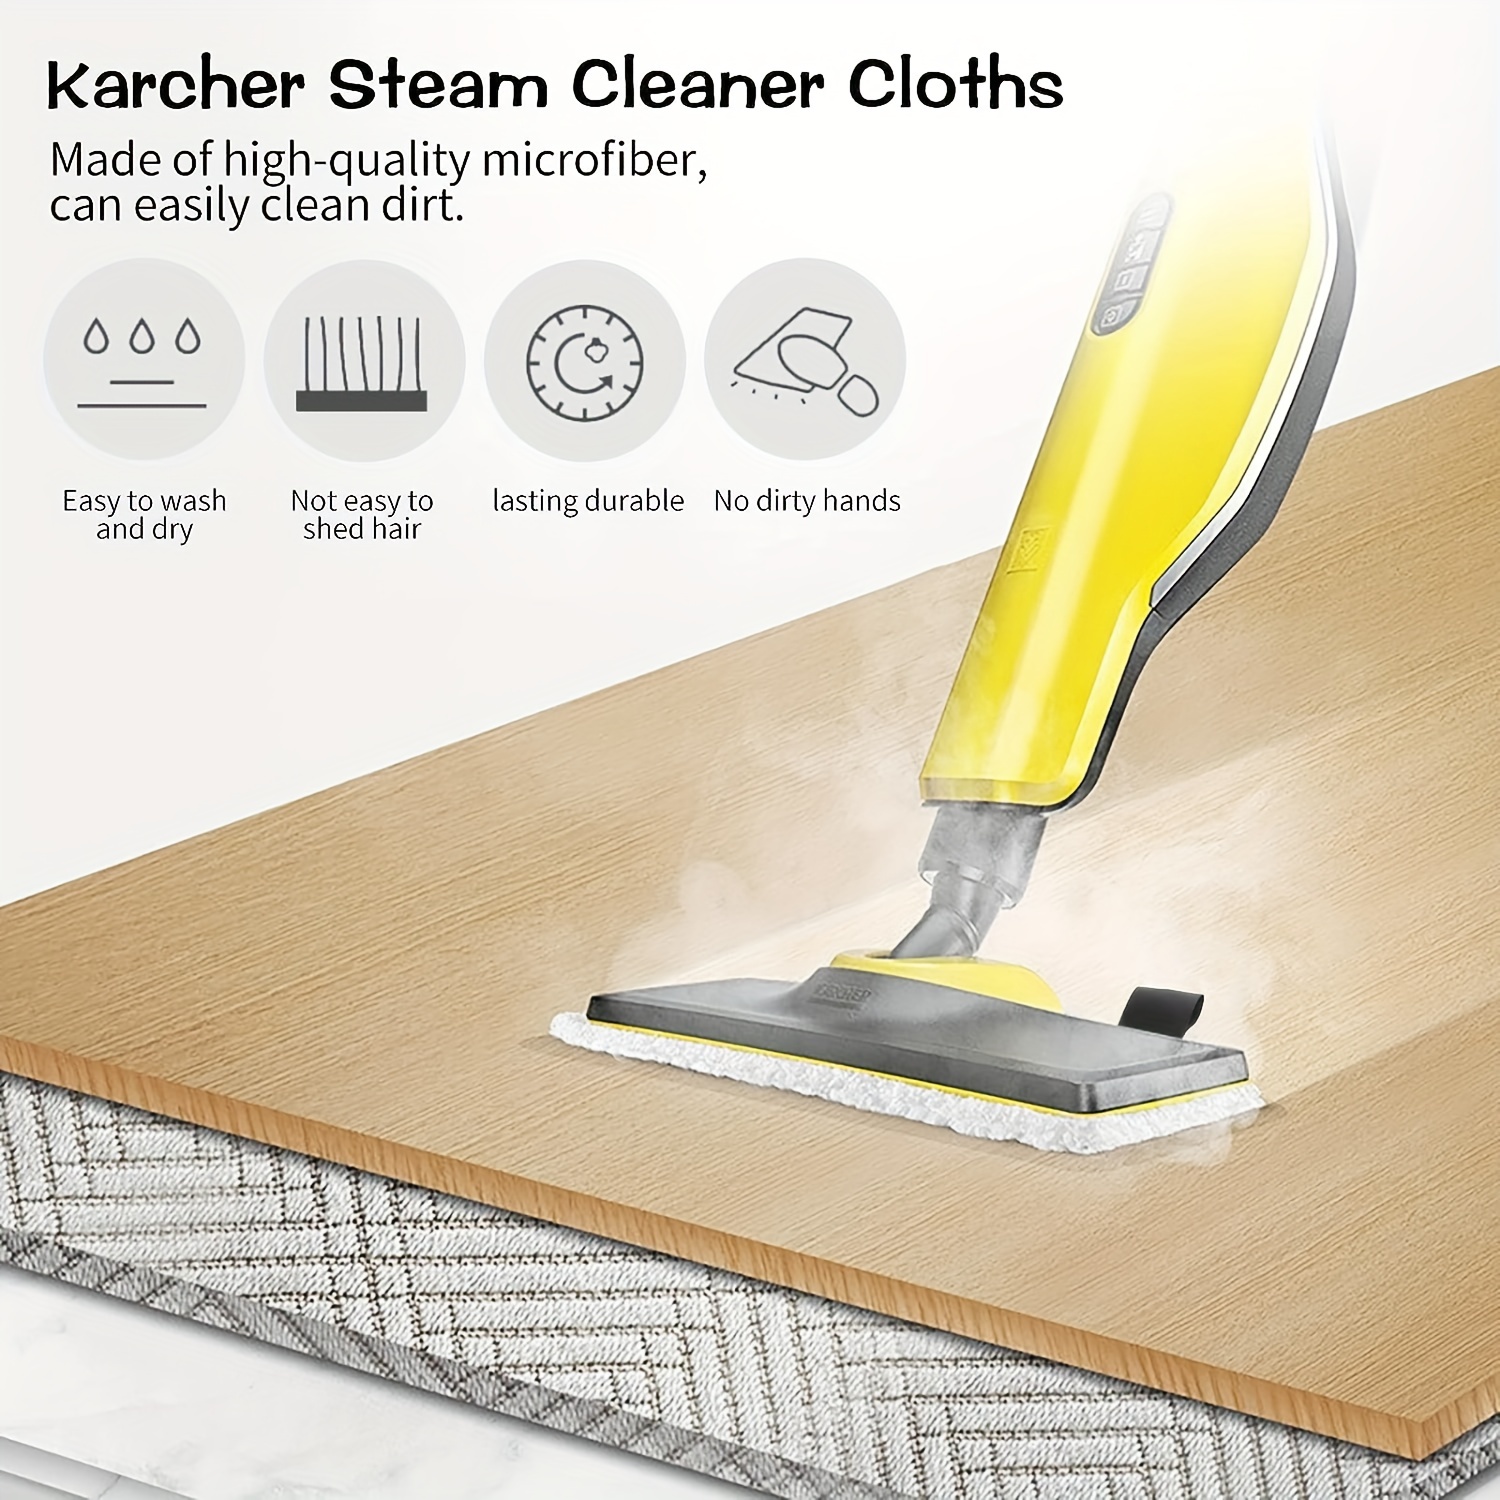 Karcher SC 4 EasyFix Steam Cleaner Review